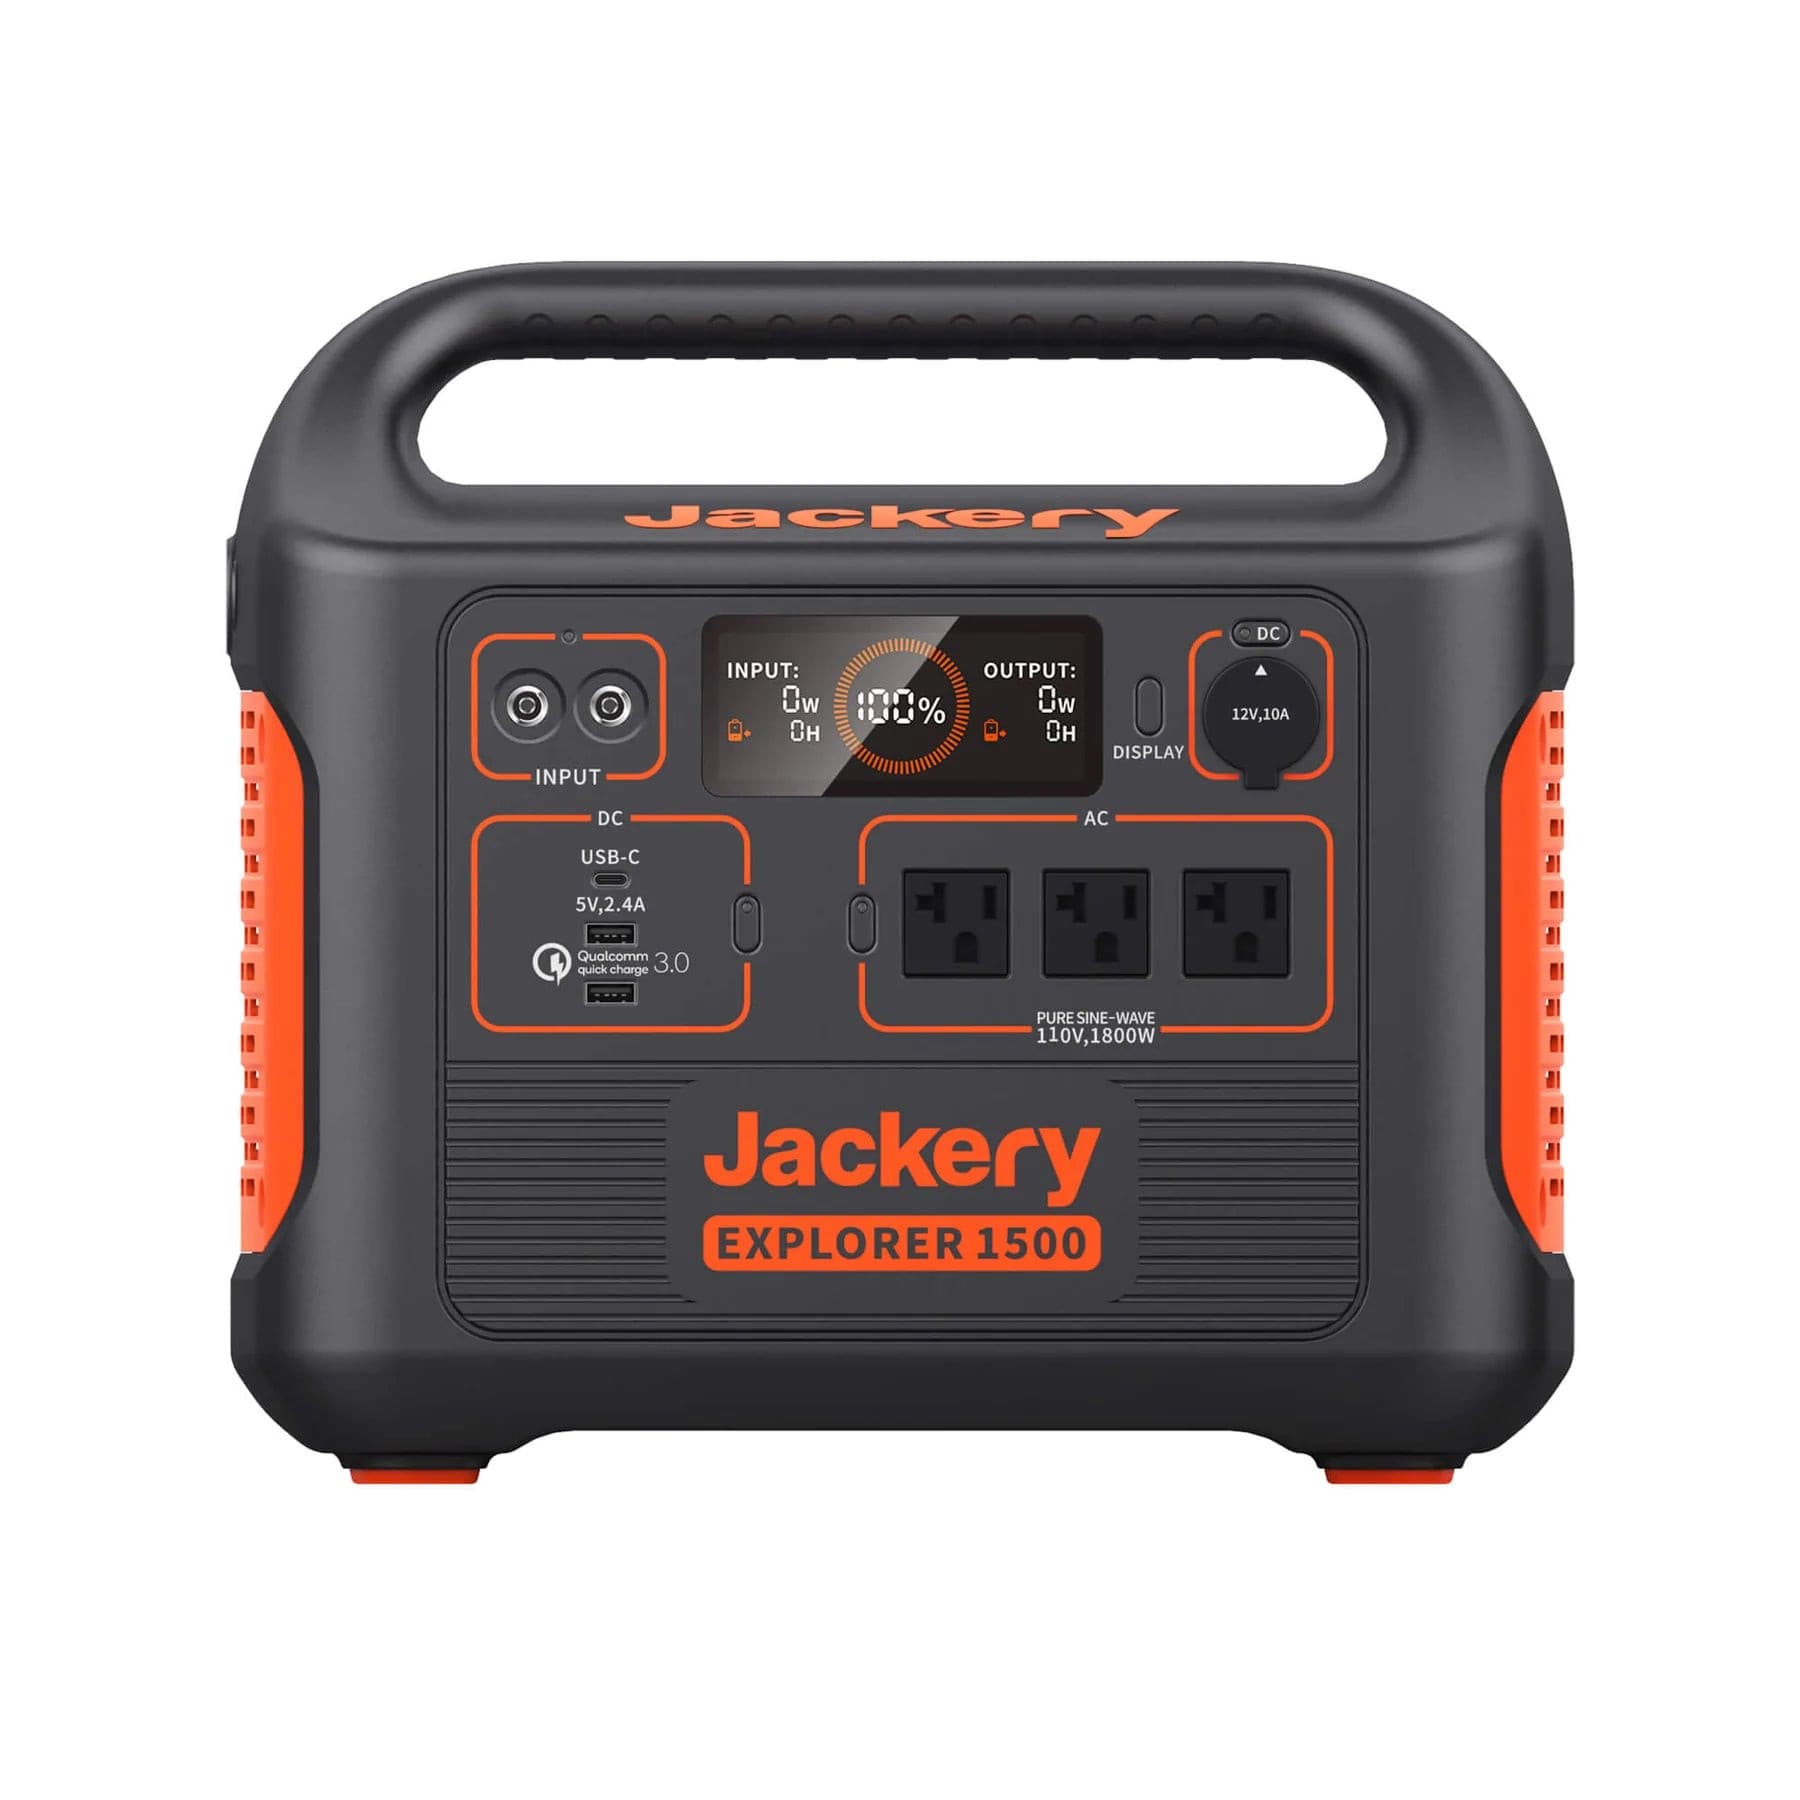 Jackery| Explorer 1500 Capacity 1534Wh Portable Power Station-EcoPowerit